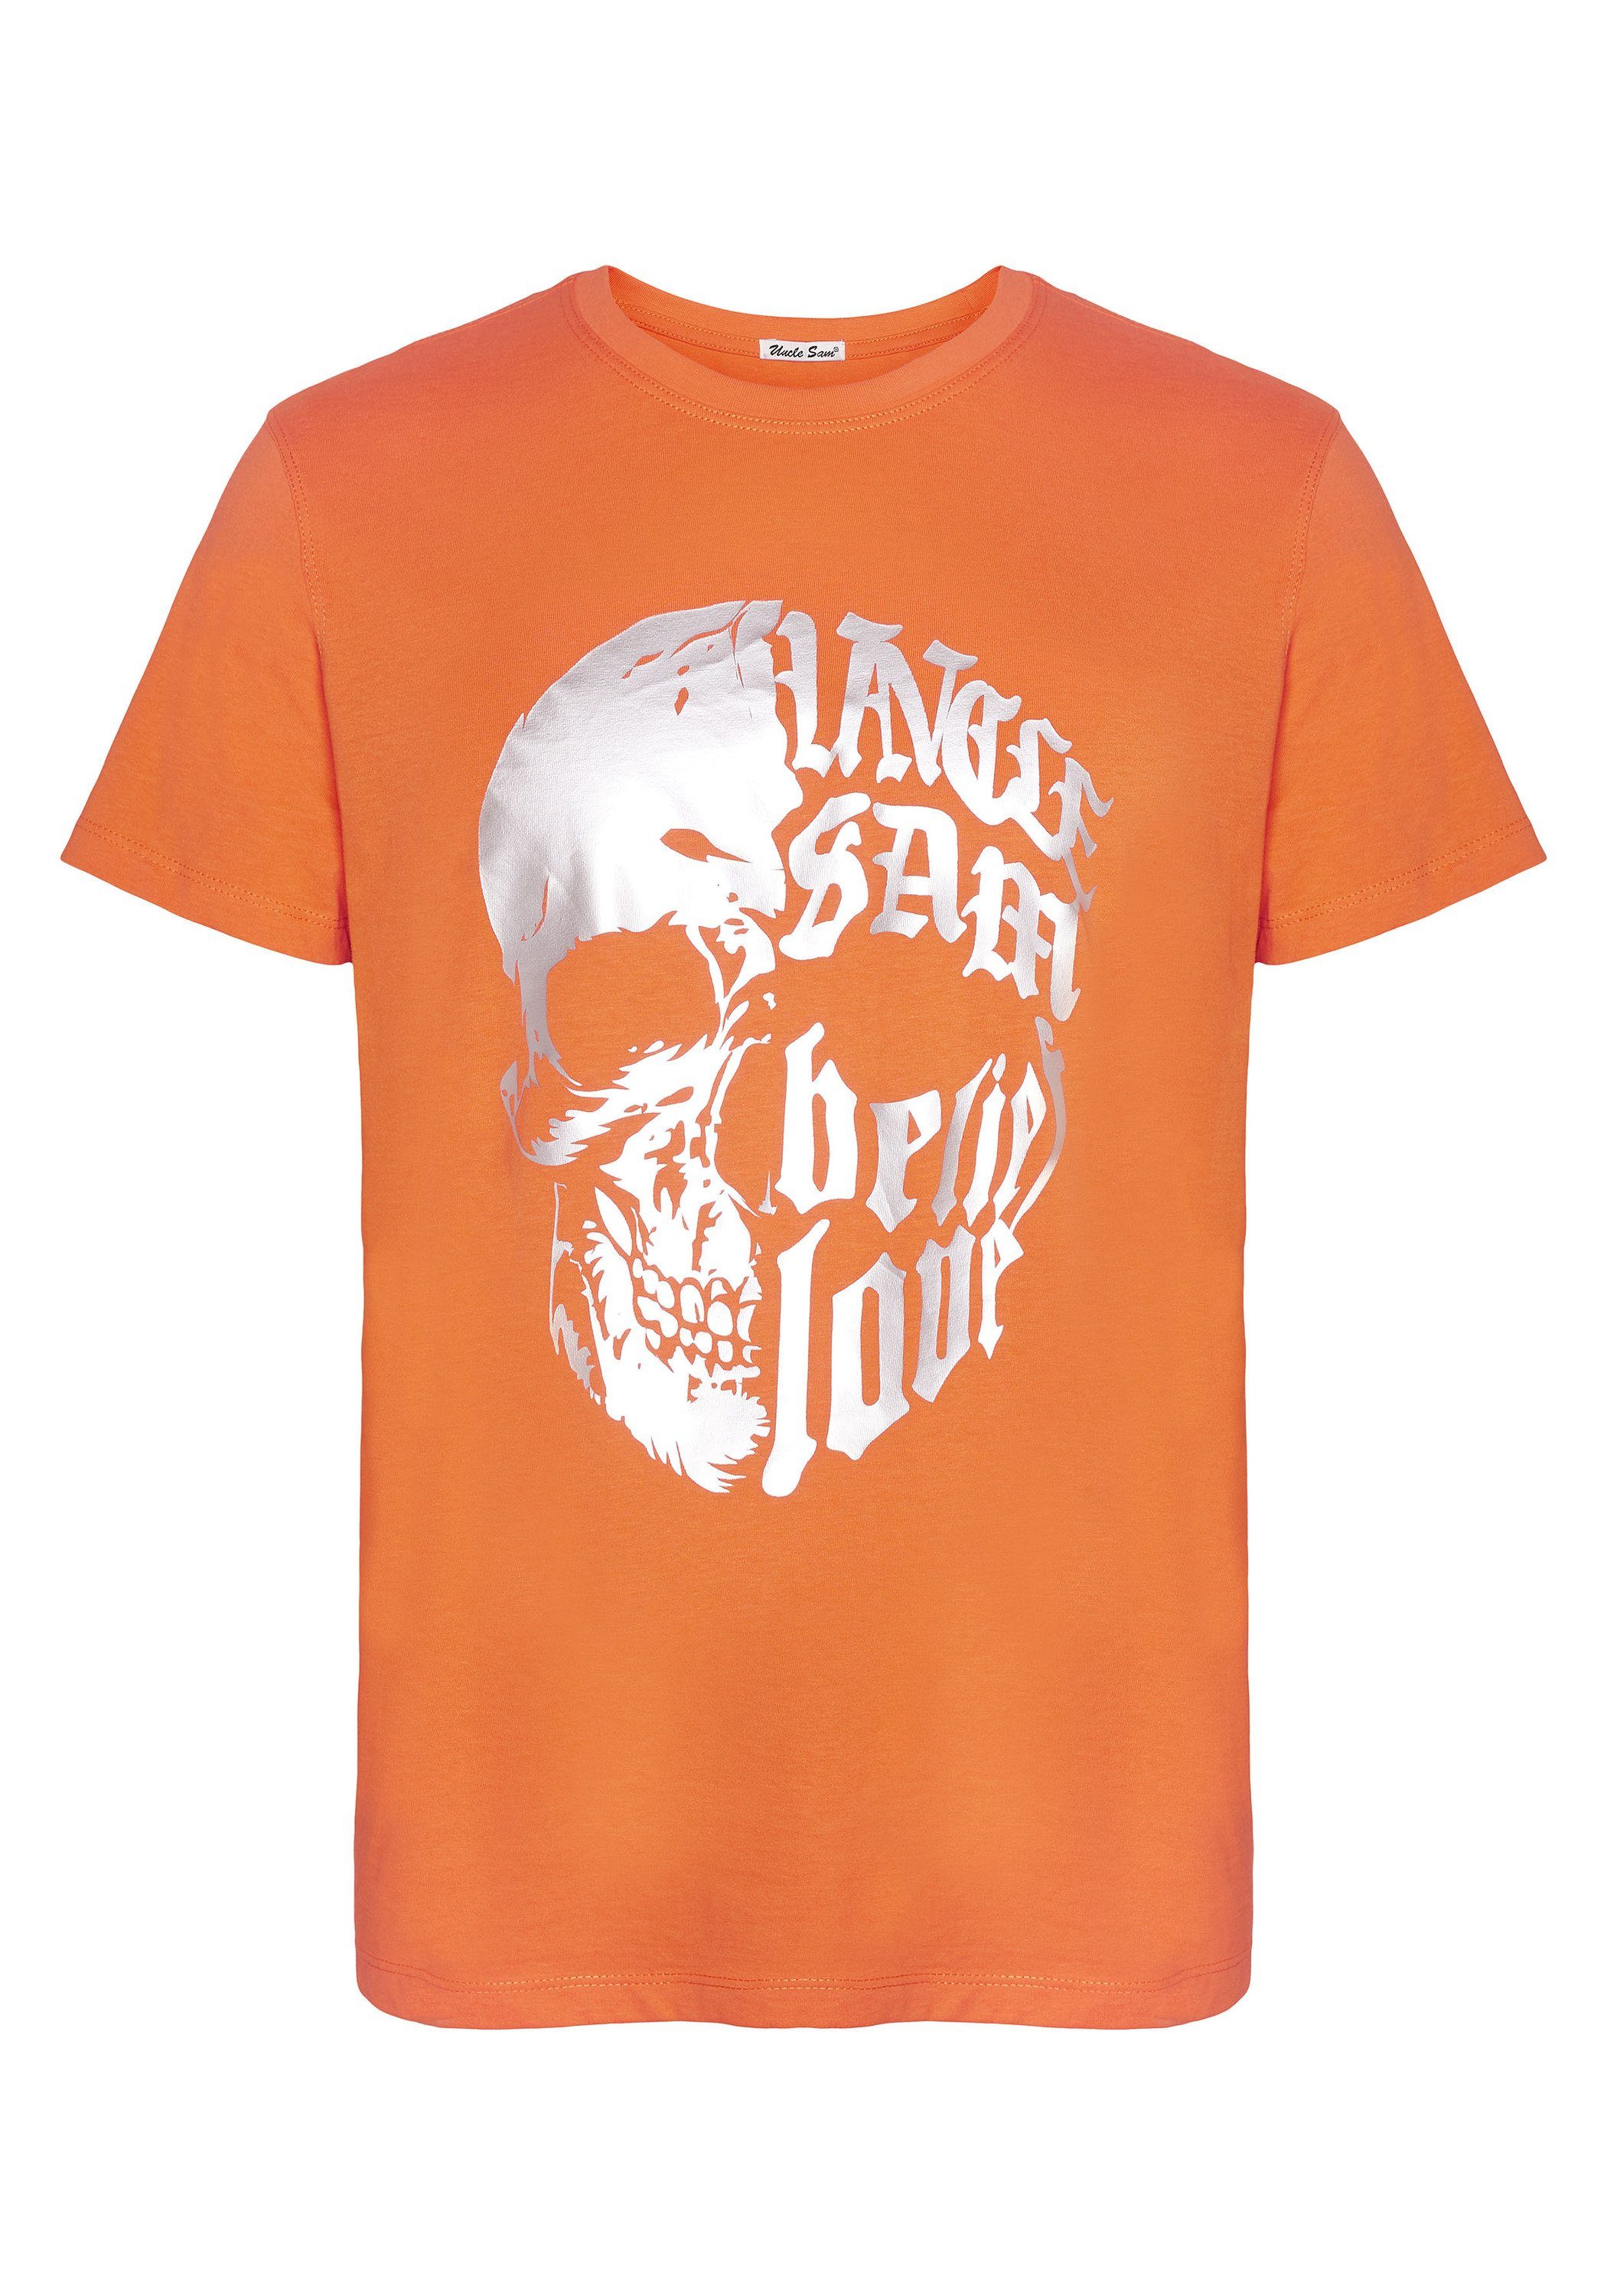 Uncle Sam Print-Shirt aus Baumwolle 16-1362 Vermillon Orange